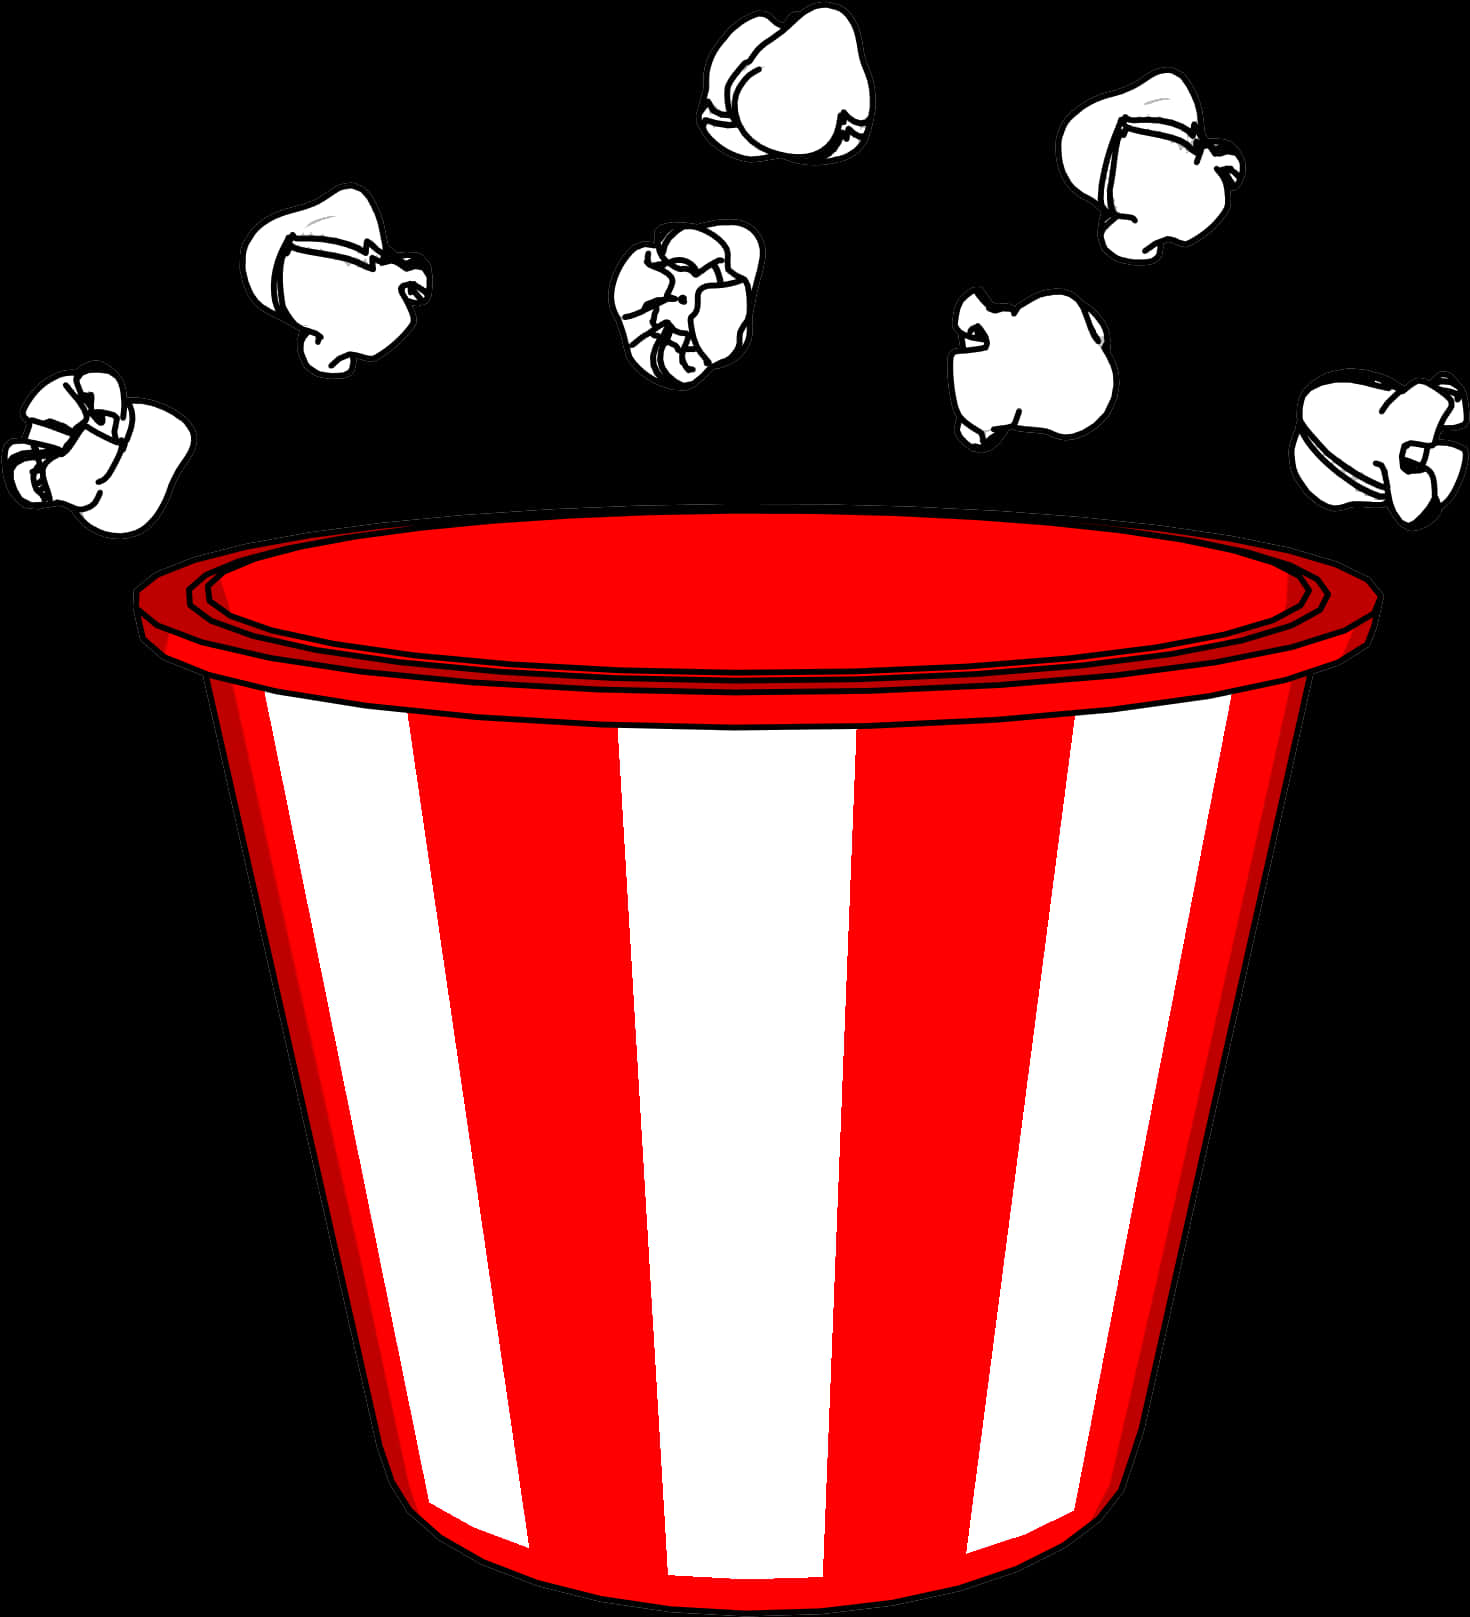 Red Striped Popcorn Bucket Clipart